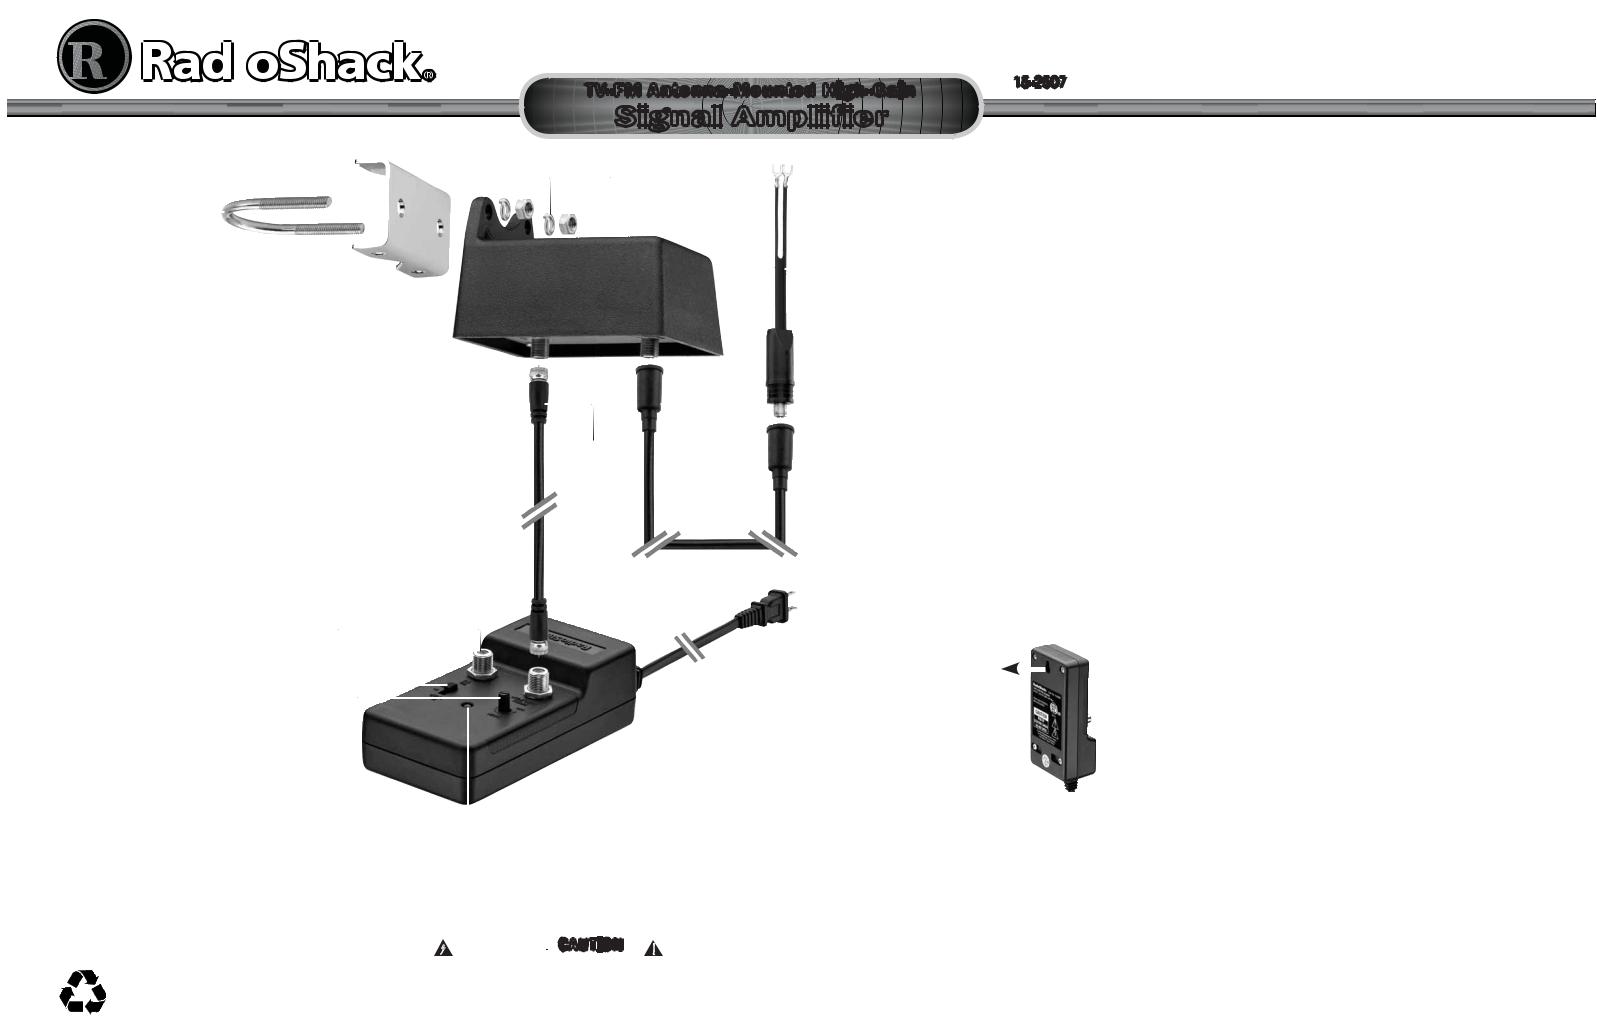 Radio Shack 15-2507 User Manual